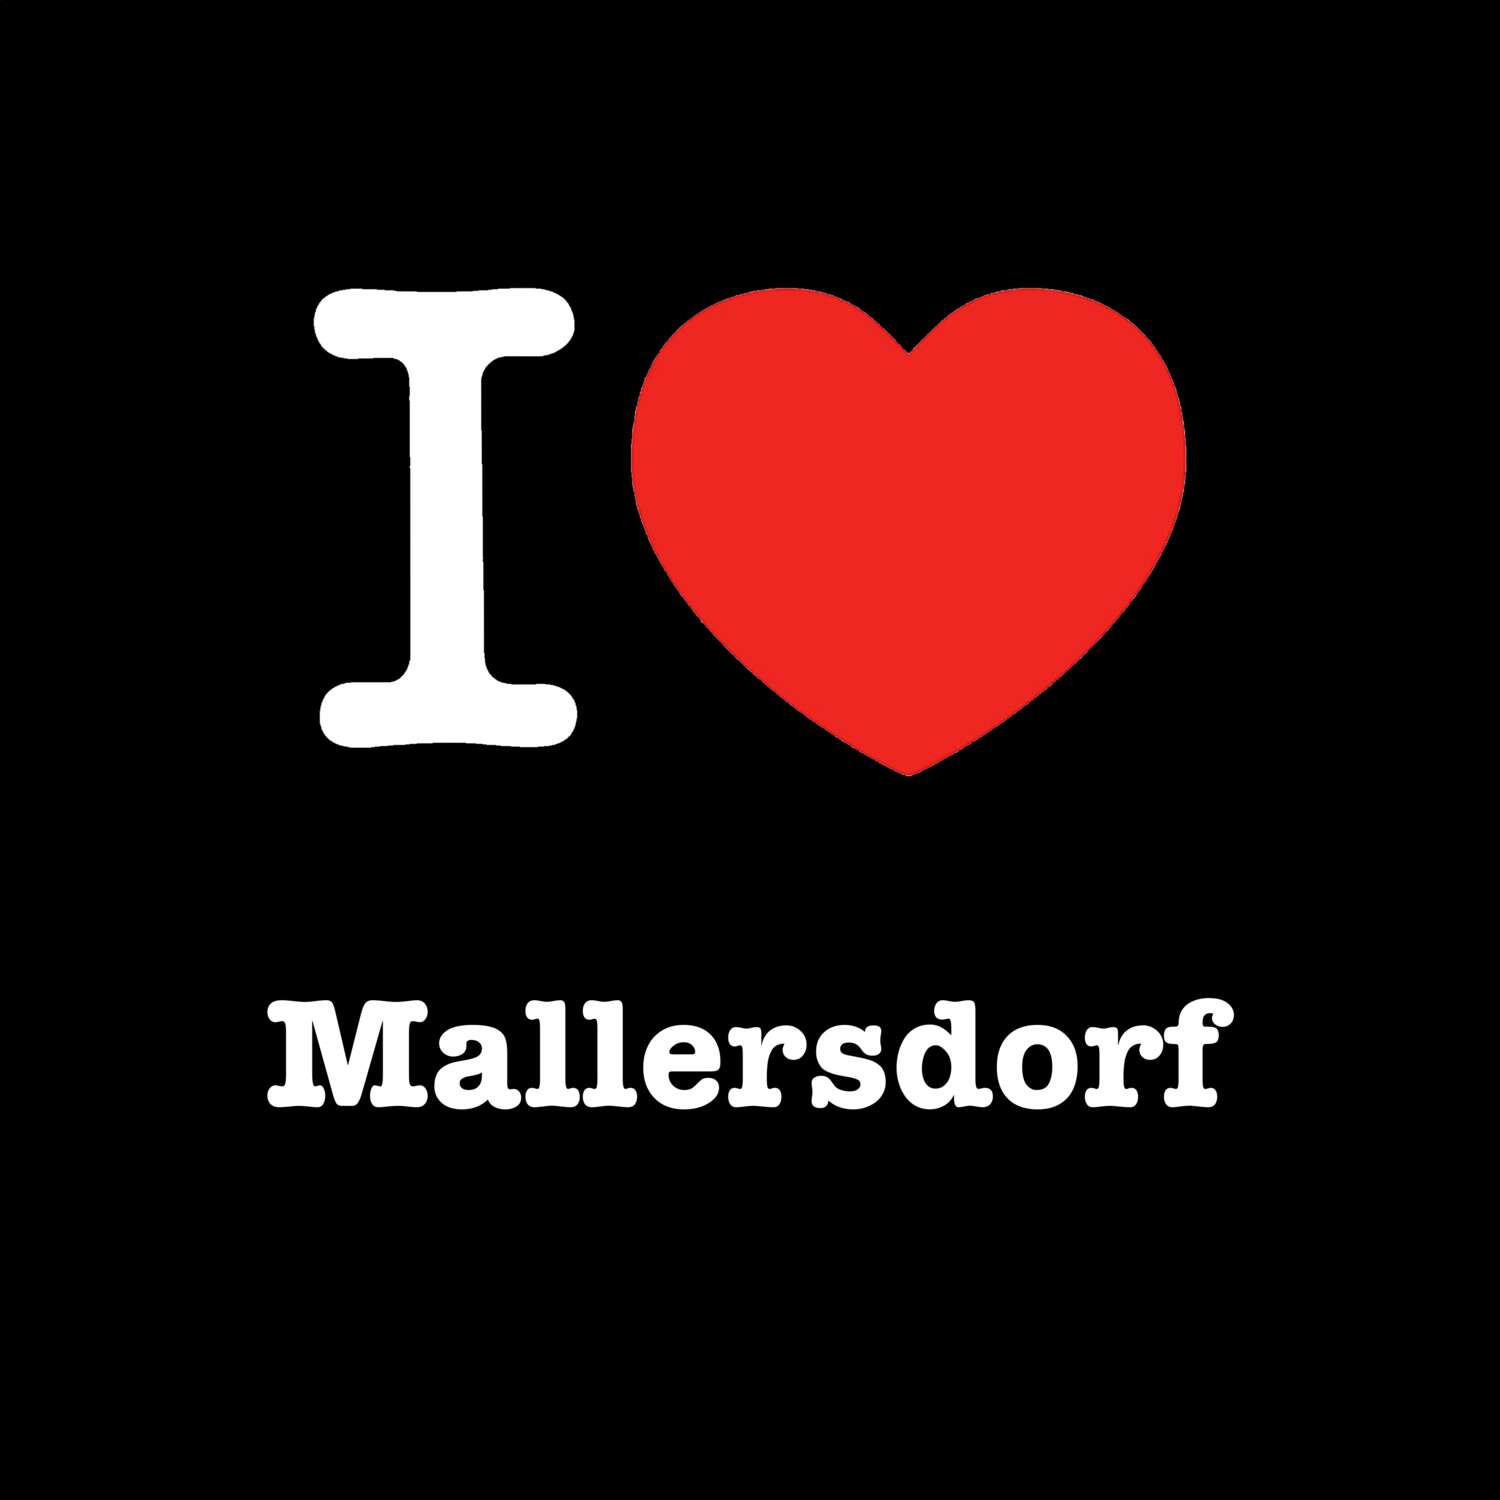 Mallersdorf T-Shirt »I love«